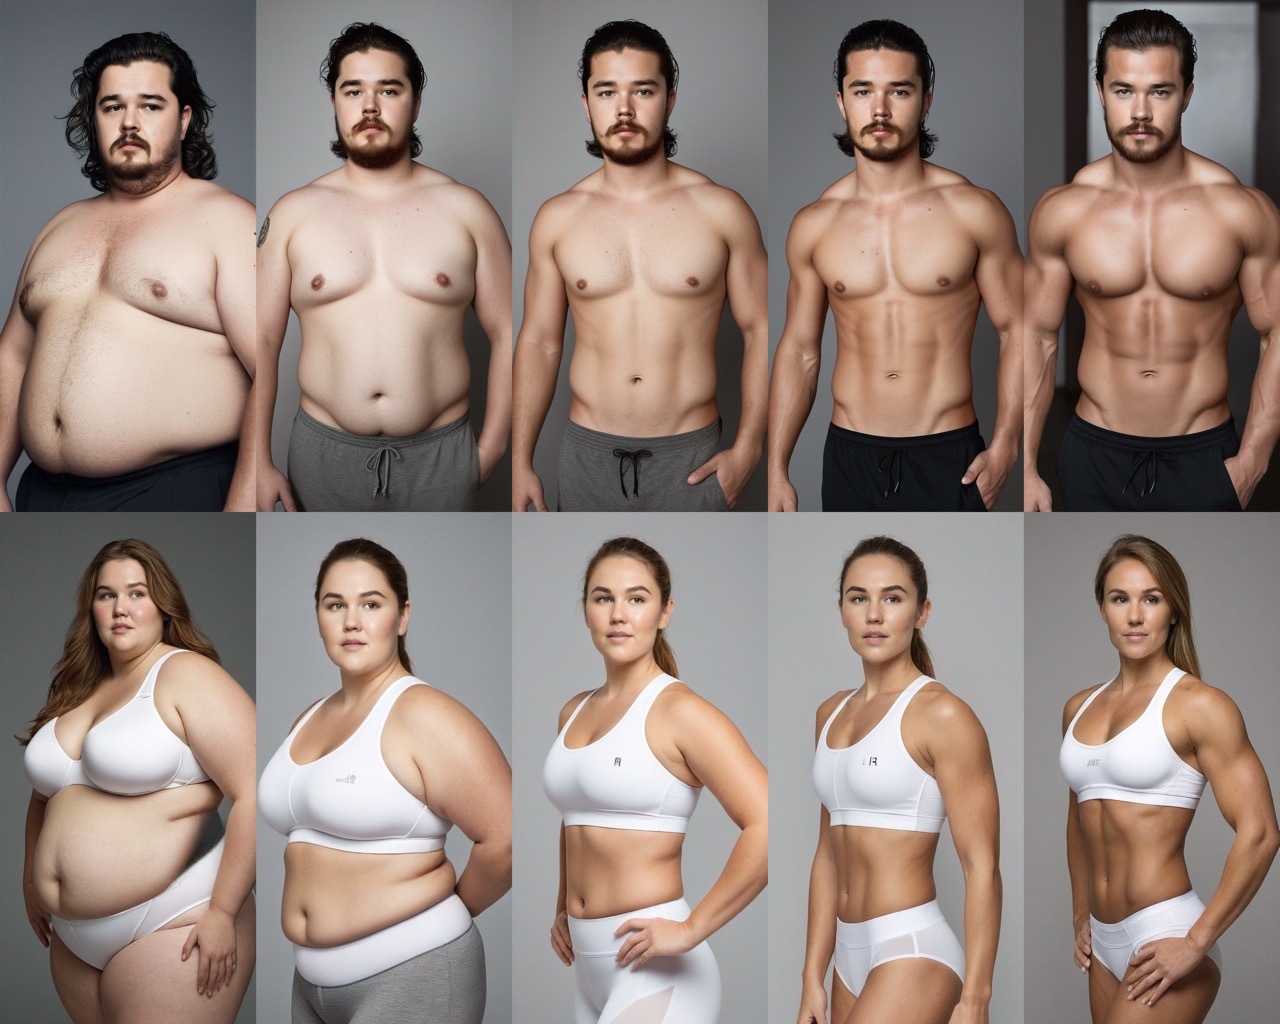  https://newmediatool.com/fat2fit-利用人工智能生成未来身体转化照片/